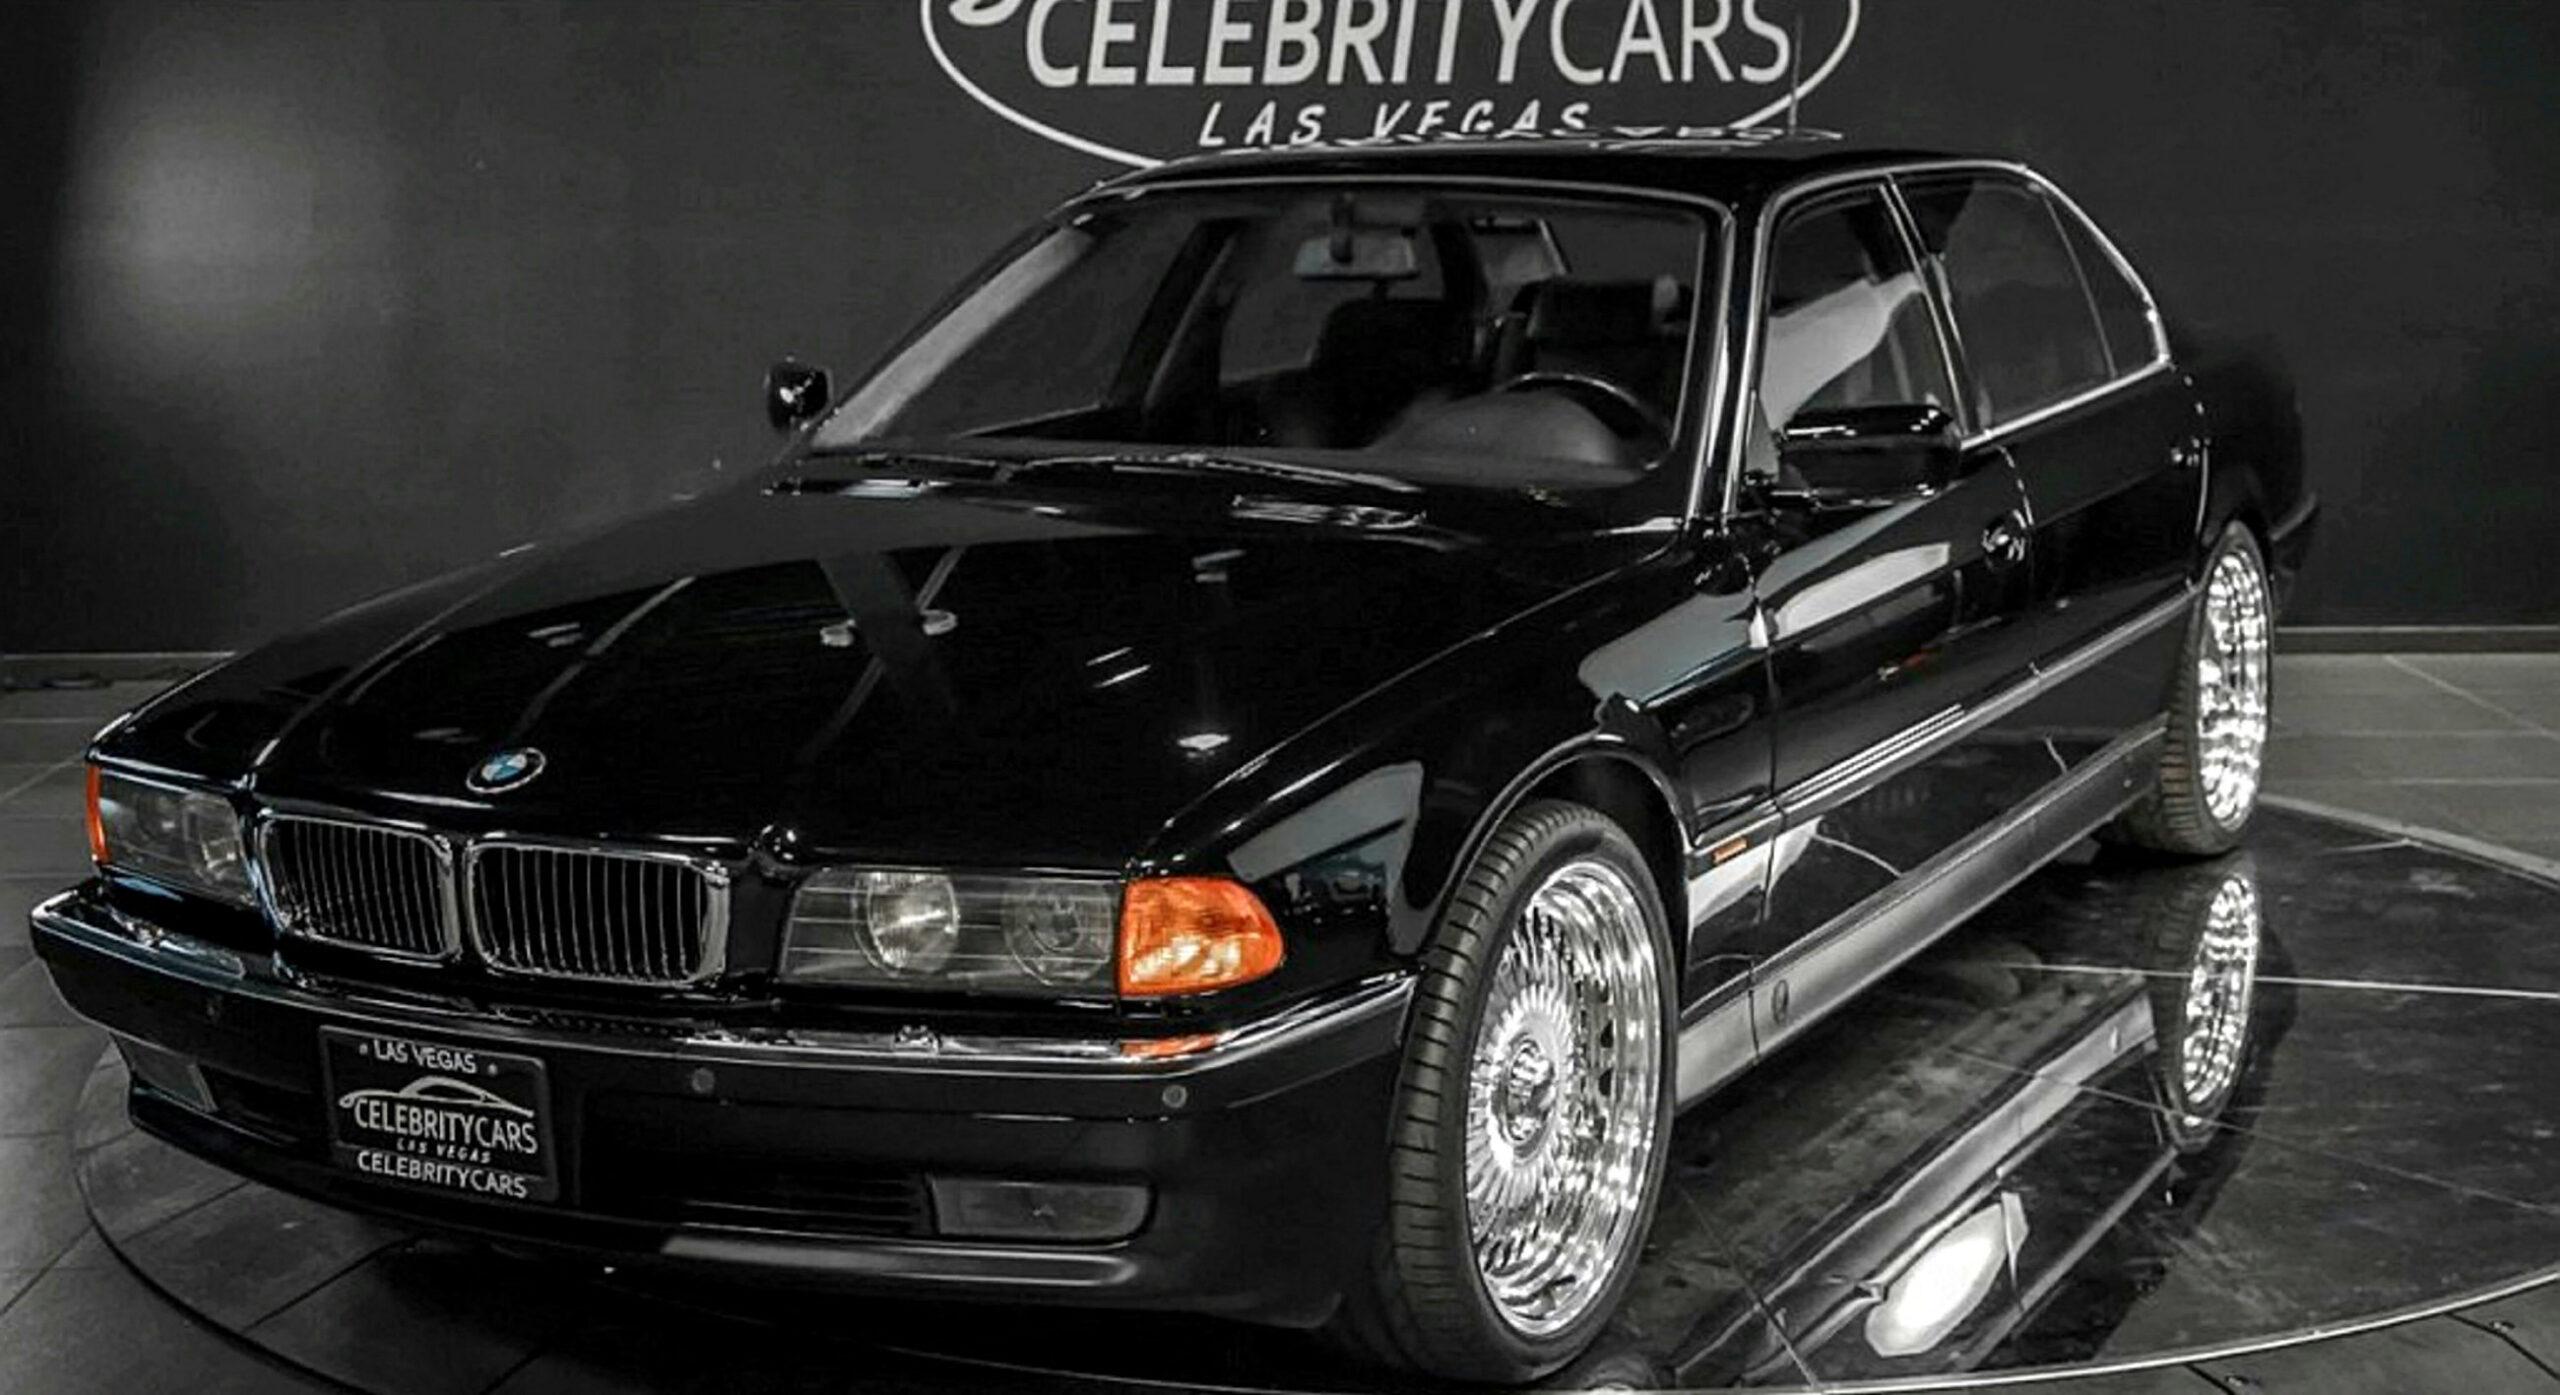 Late Hip-Hop Icon Tupac Shakur's deadly car on sale